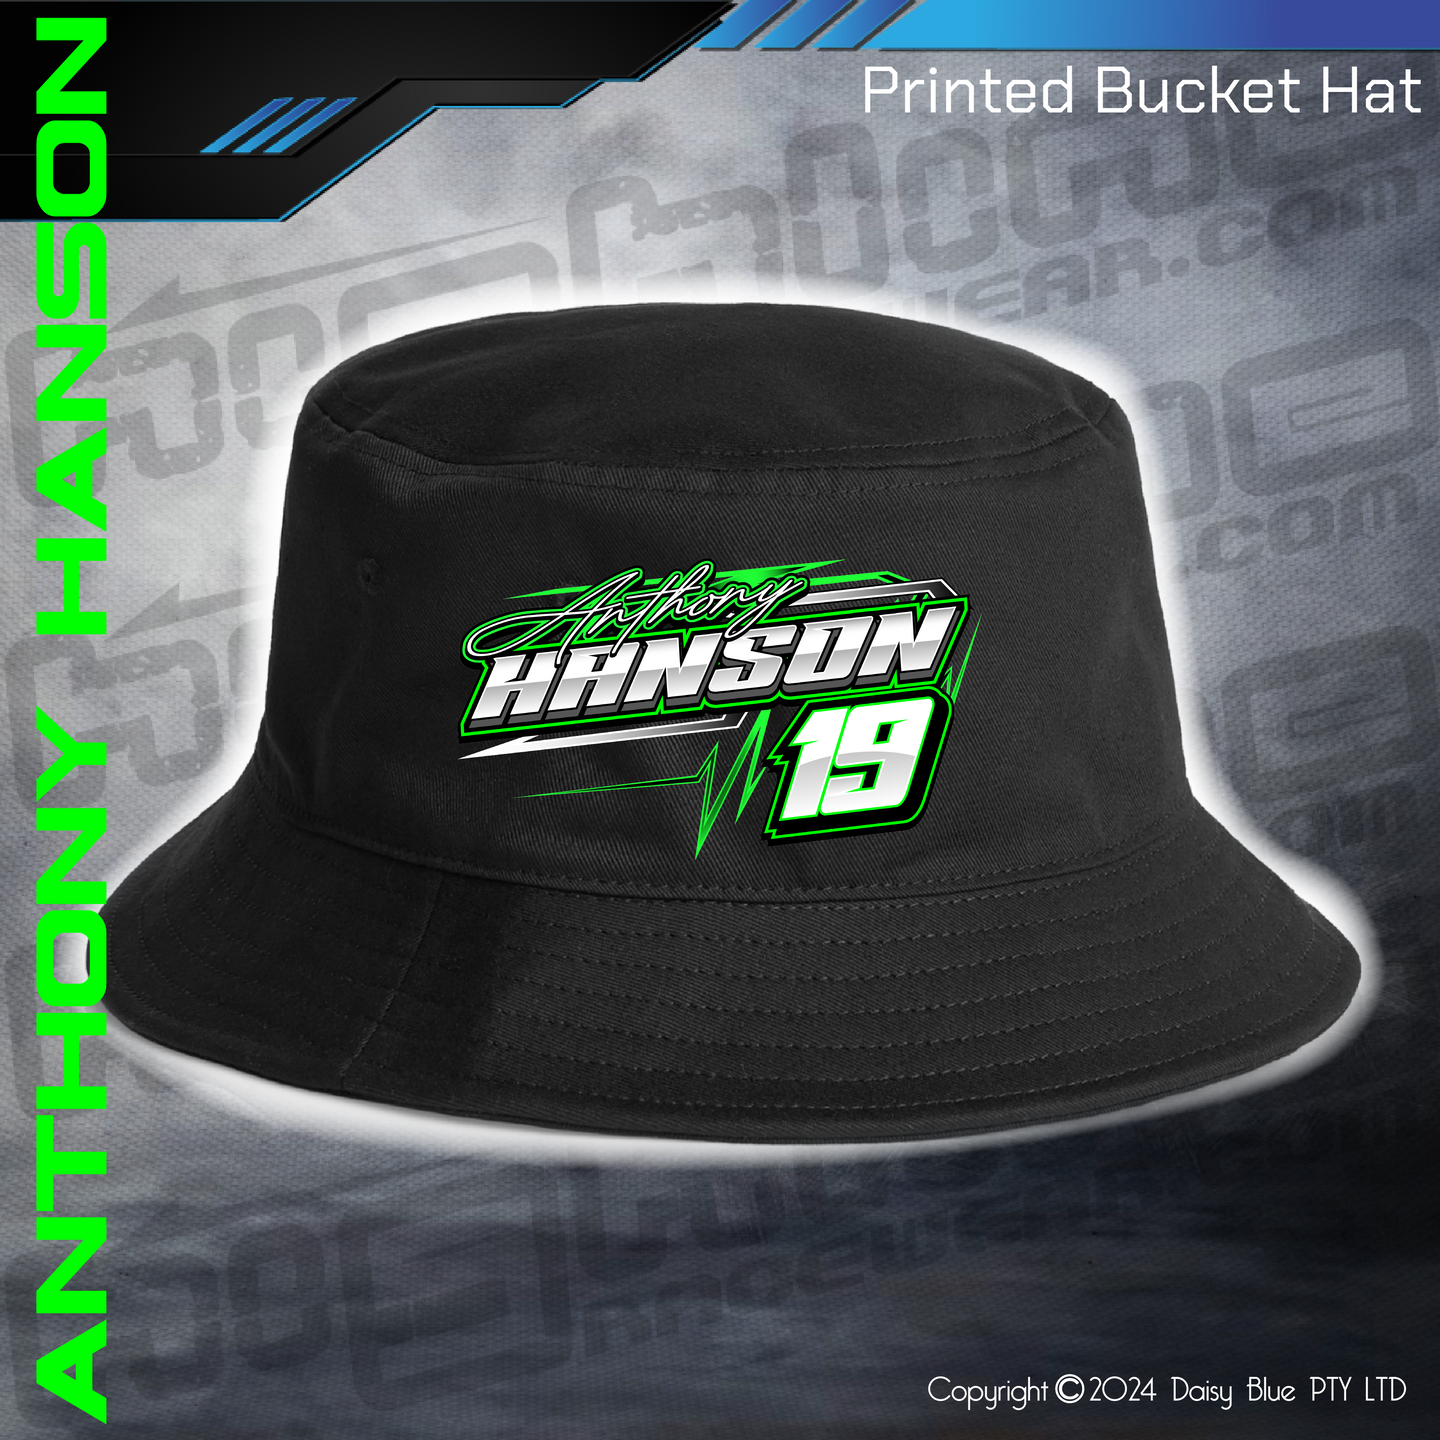 Printed Bucket Hat - Anthony Hanson